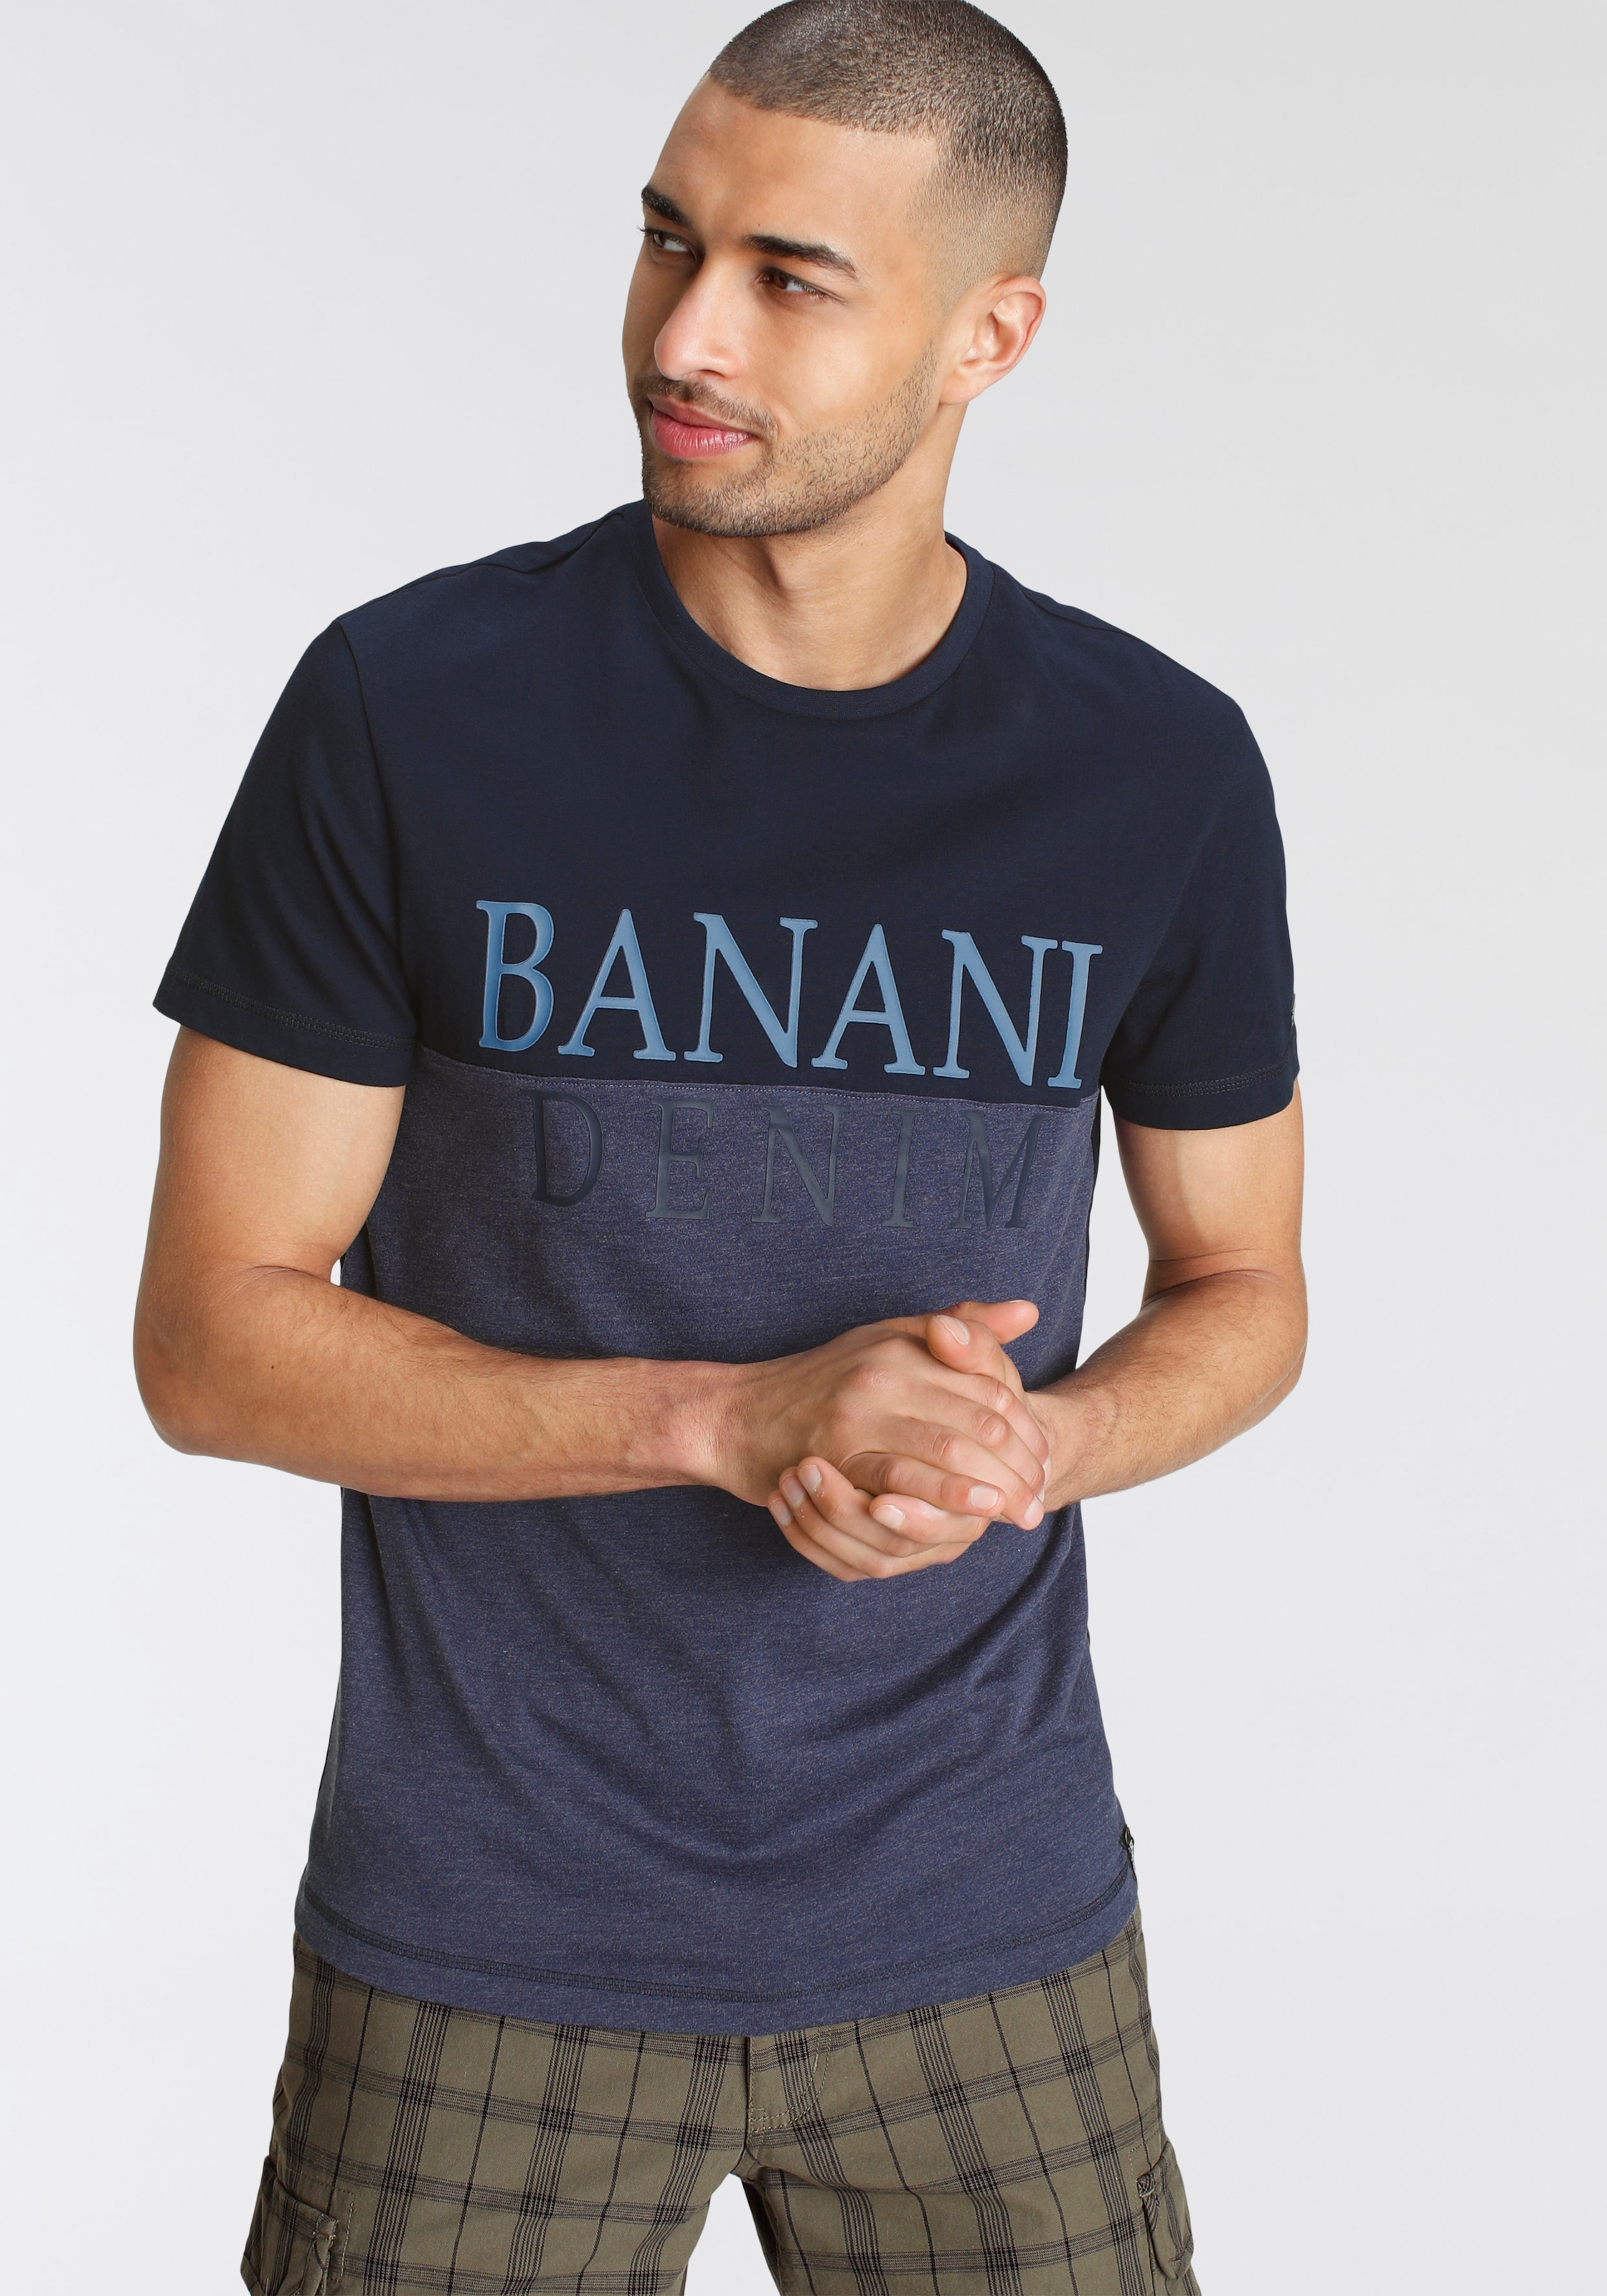 Bruno Banani T-Shirt bei ♕